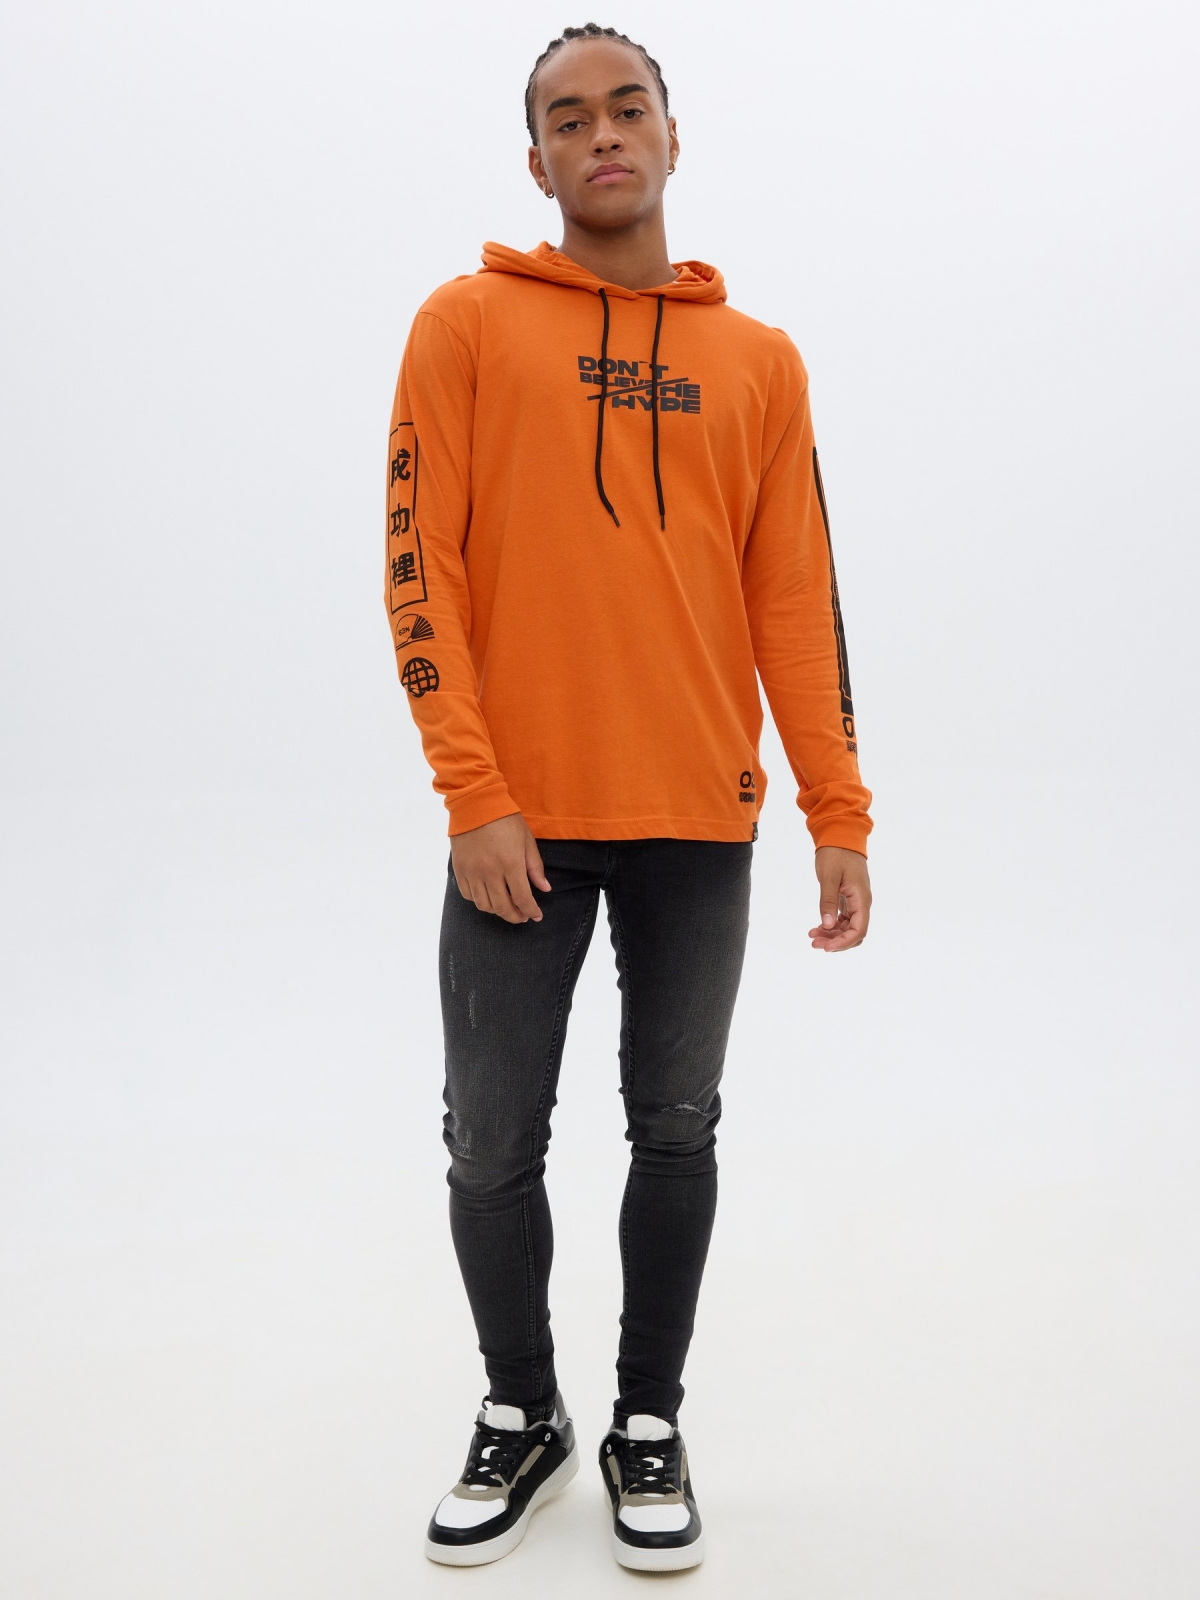 Printed hooded t-shirt dark orange front view